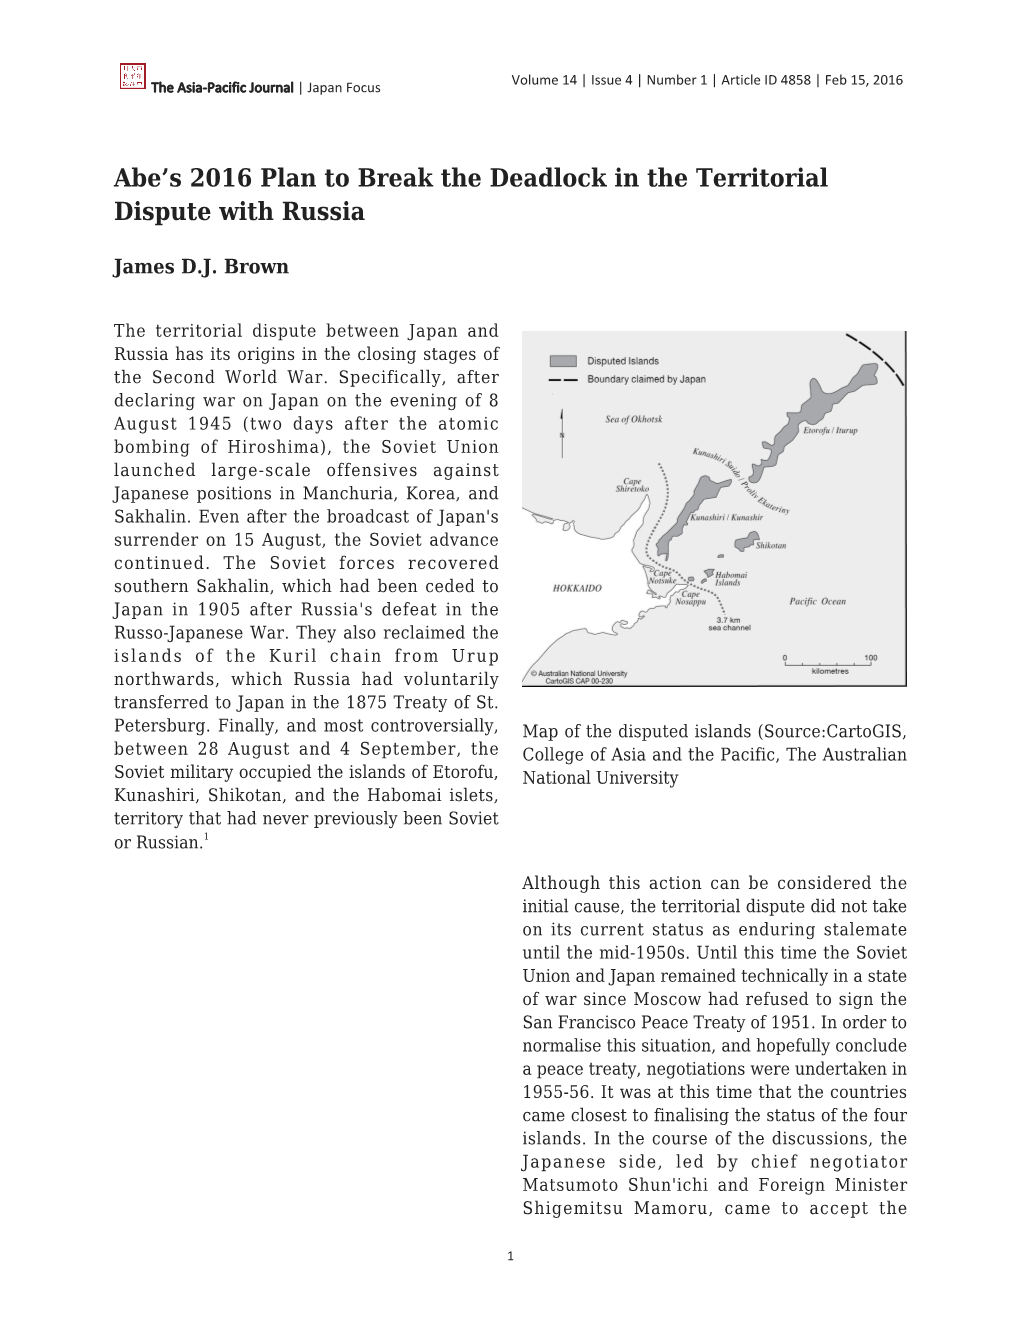 Abe's 2016 Plan to Break the Deadlock in the Territorial Dispute